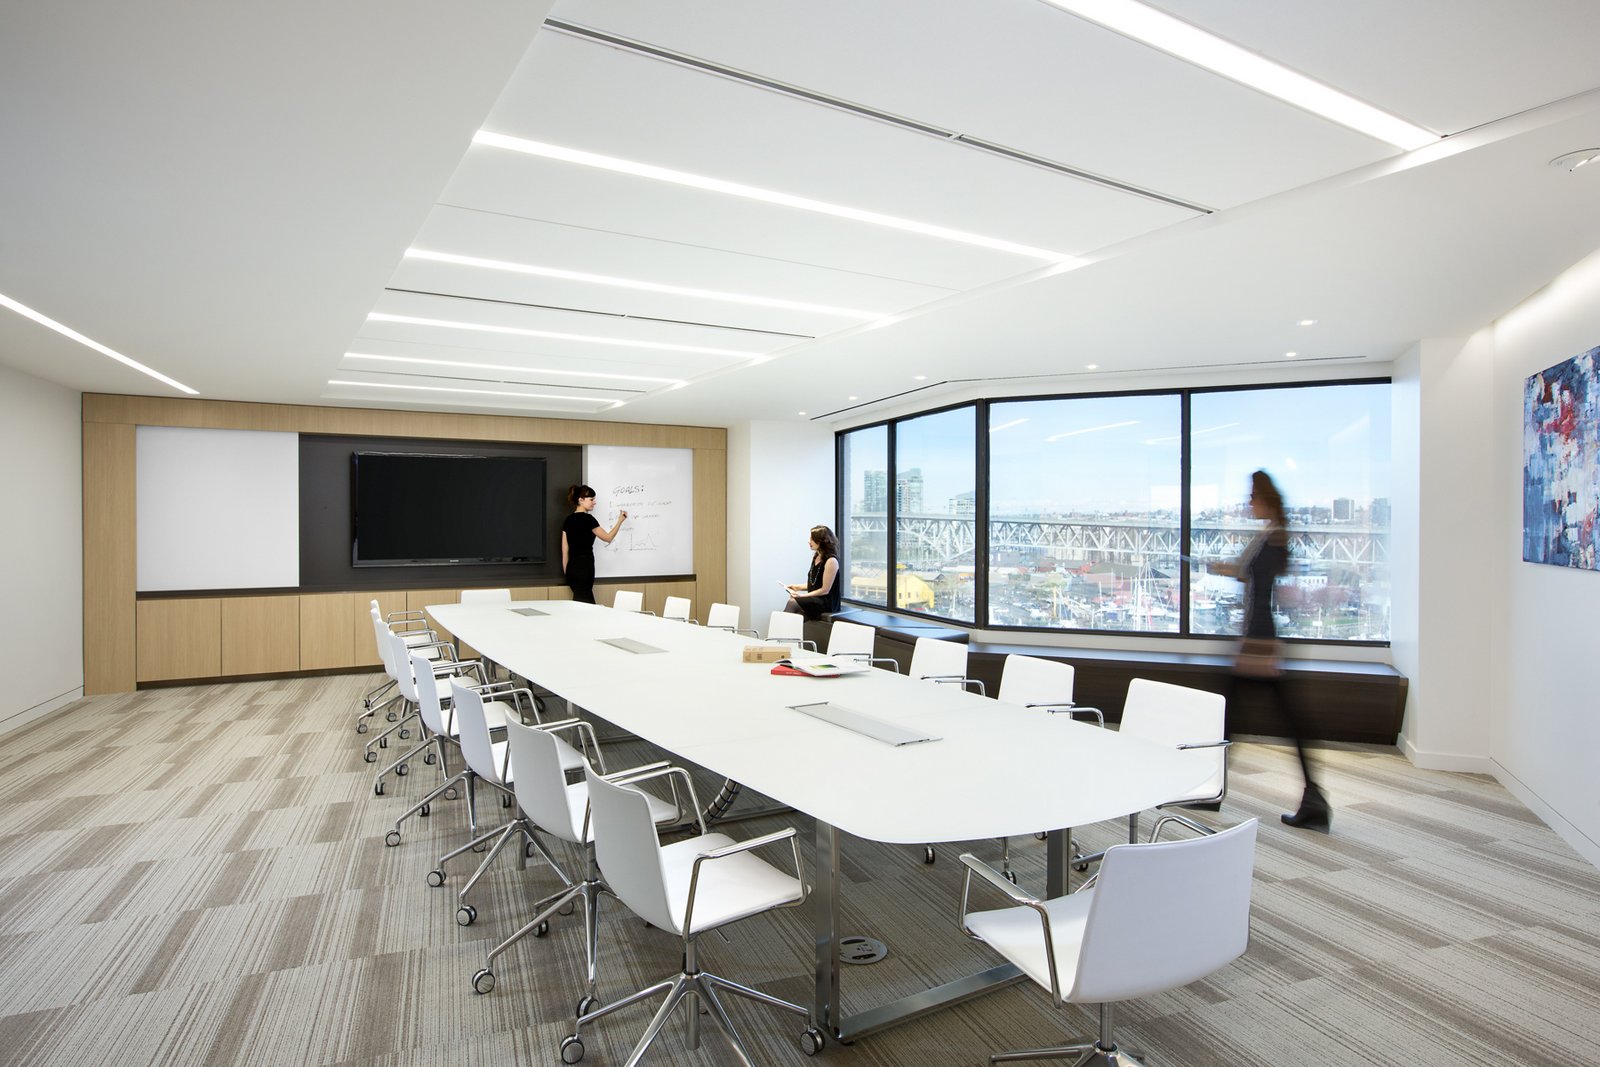 proyectolandolina: modern executive office interior design